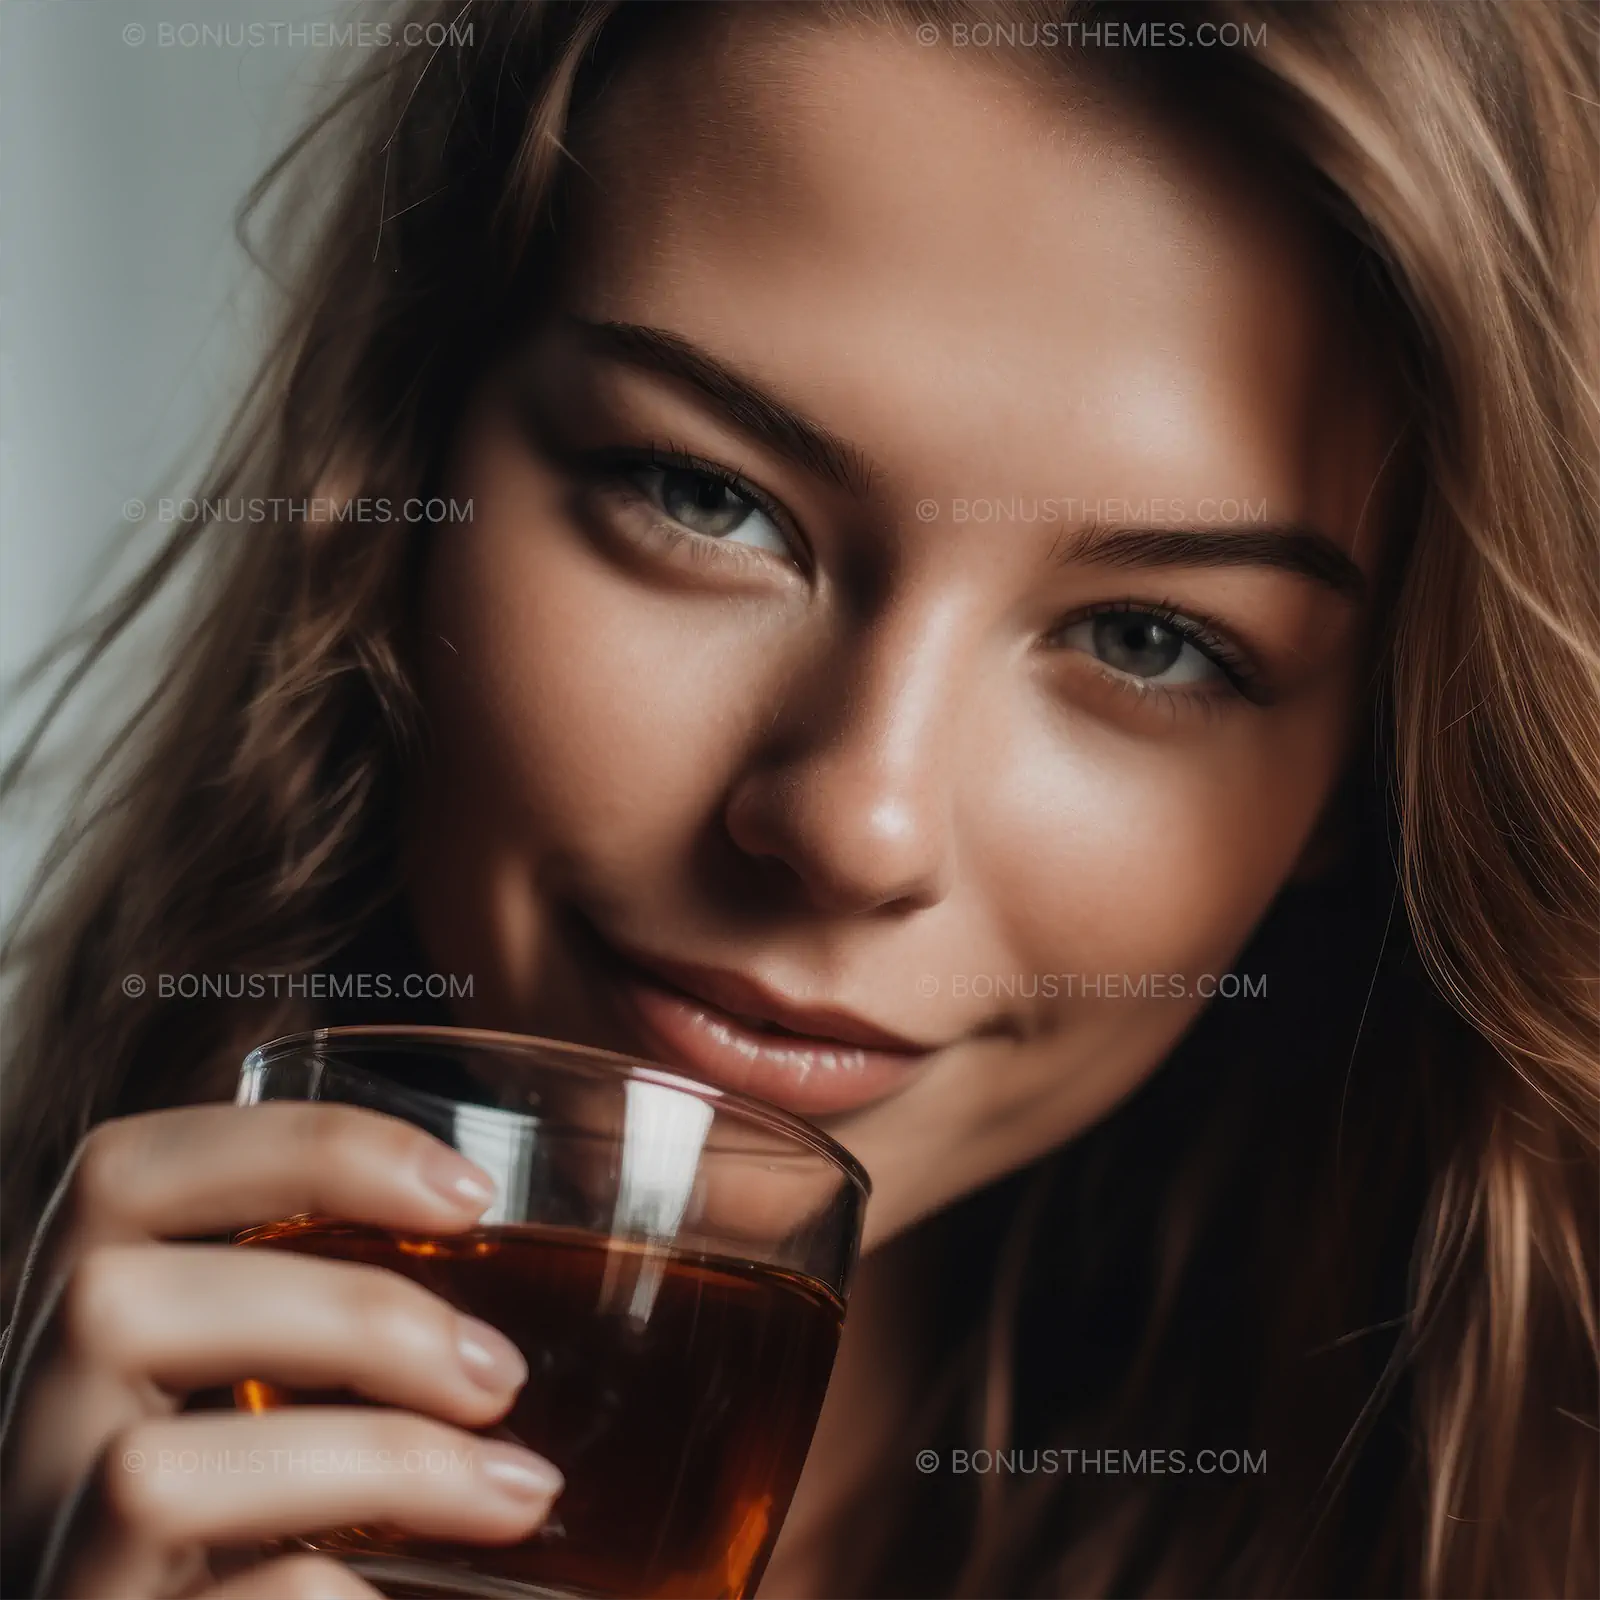 Woman with a glass of irish coffee